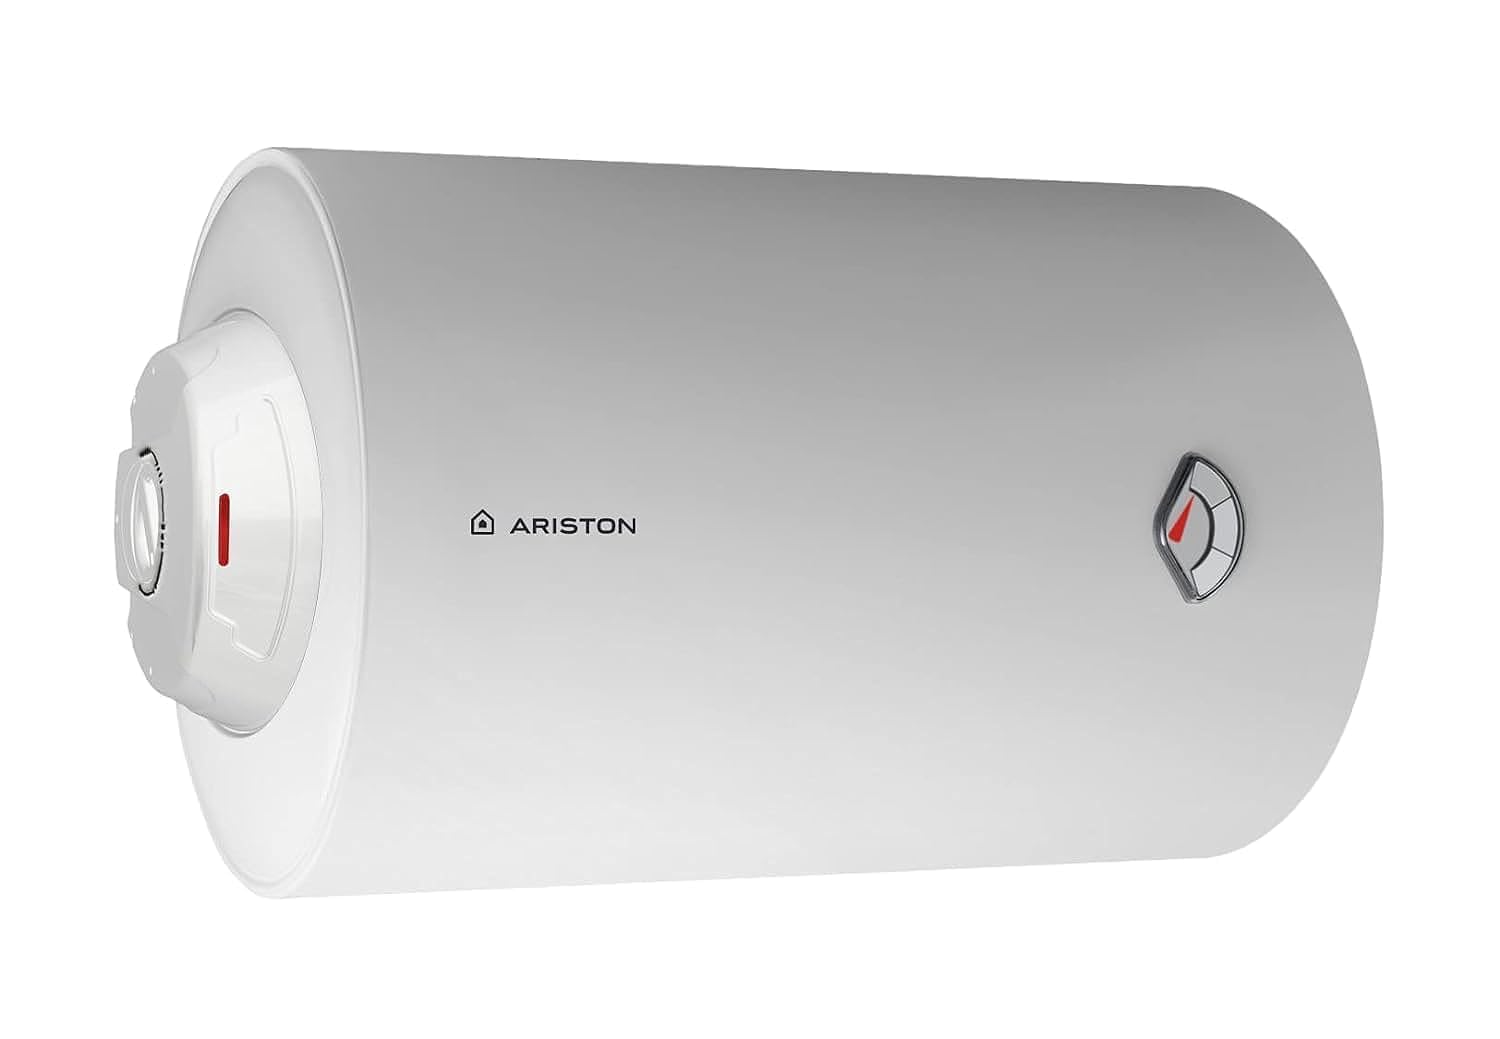 Ariston 80 Liters Water Heater, Horizontal, Easy Maintenance, External Temperature Regulation, Enameled Steel Tank, Energy Efficient, 1.5kW 230V, 1 Years Warranty, SG80H